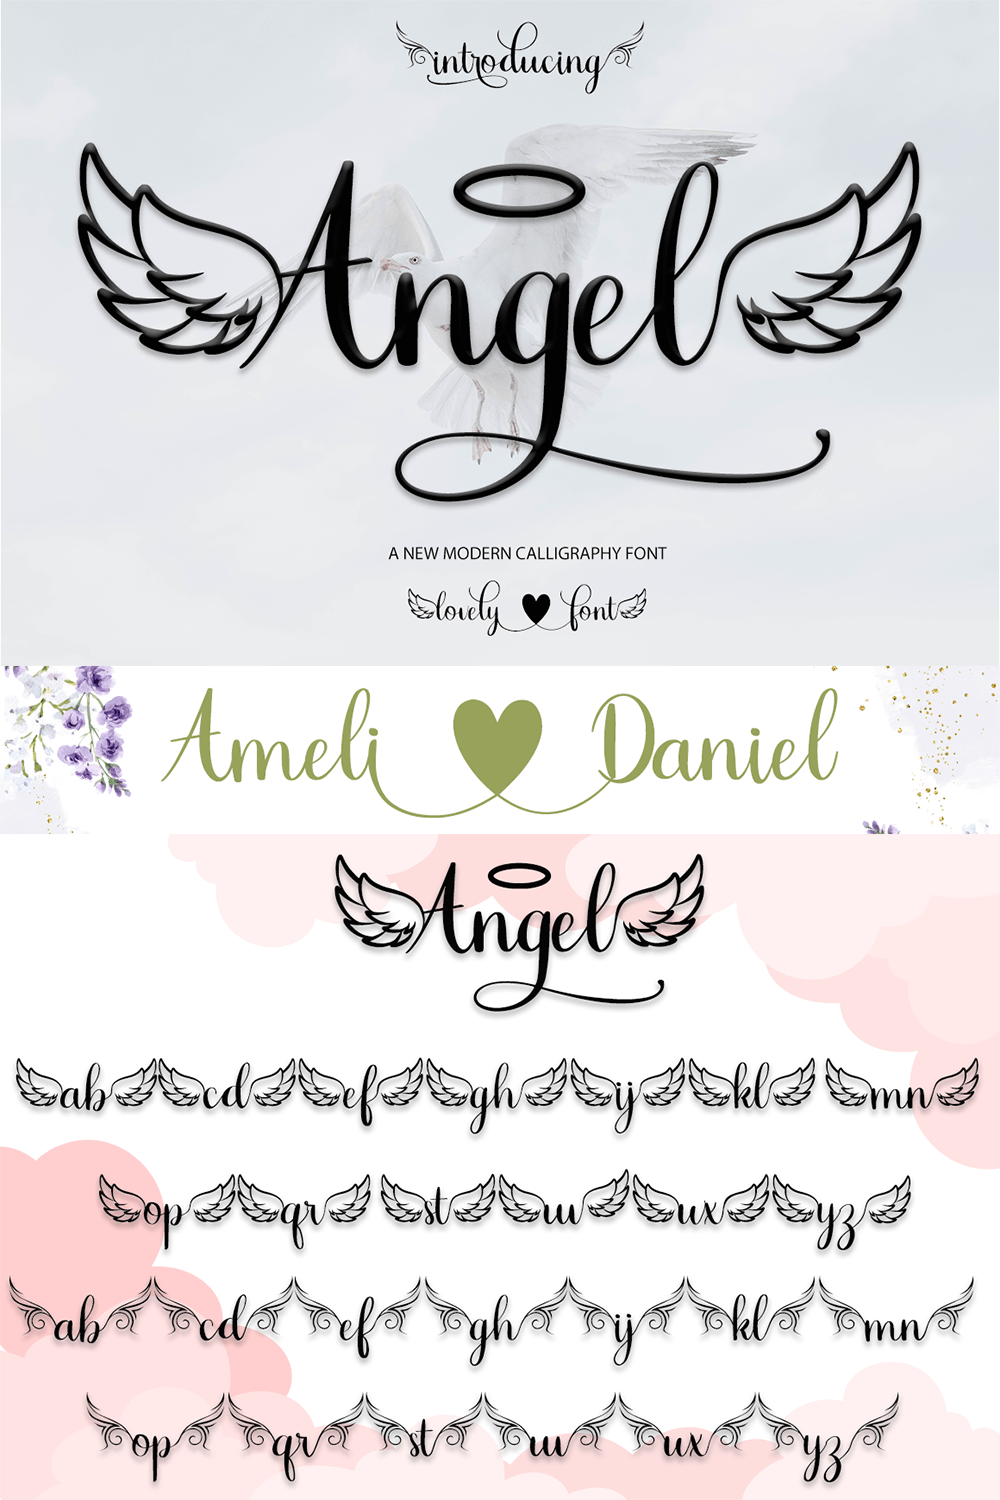 Script Font Angel Design pinterest image.